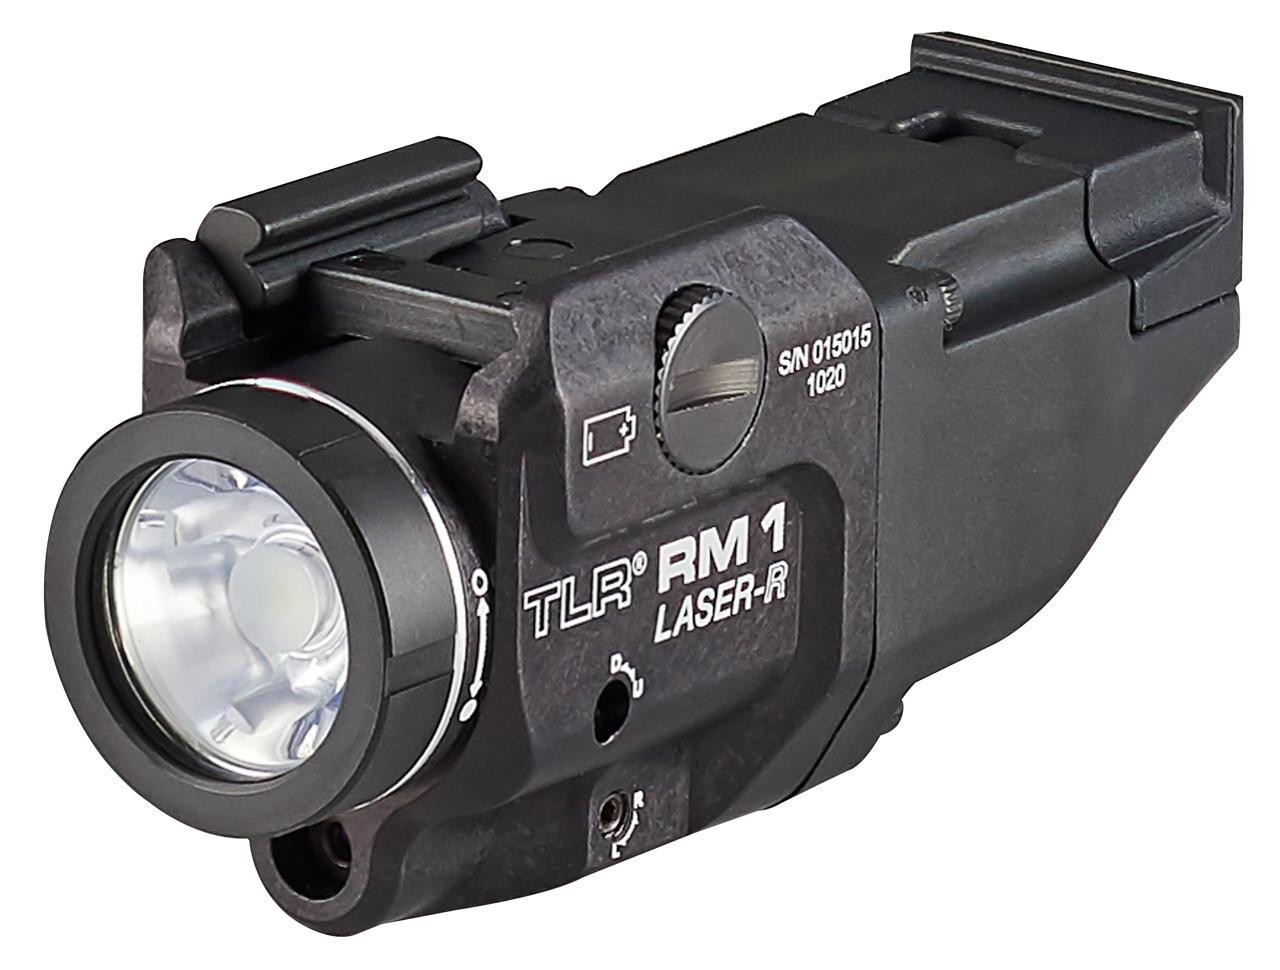 Streamlight Streamlight, TLR RM 1 Laser, Tac Light w/laser, 500 Lumens, Black W/ Tail Cap Switch 080926694453